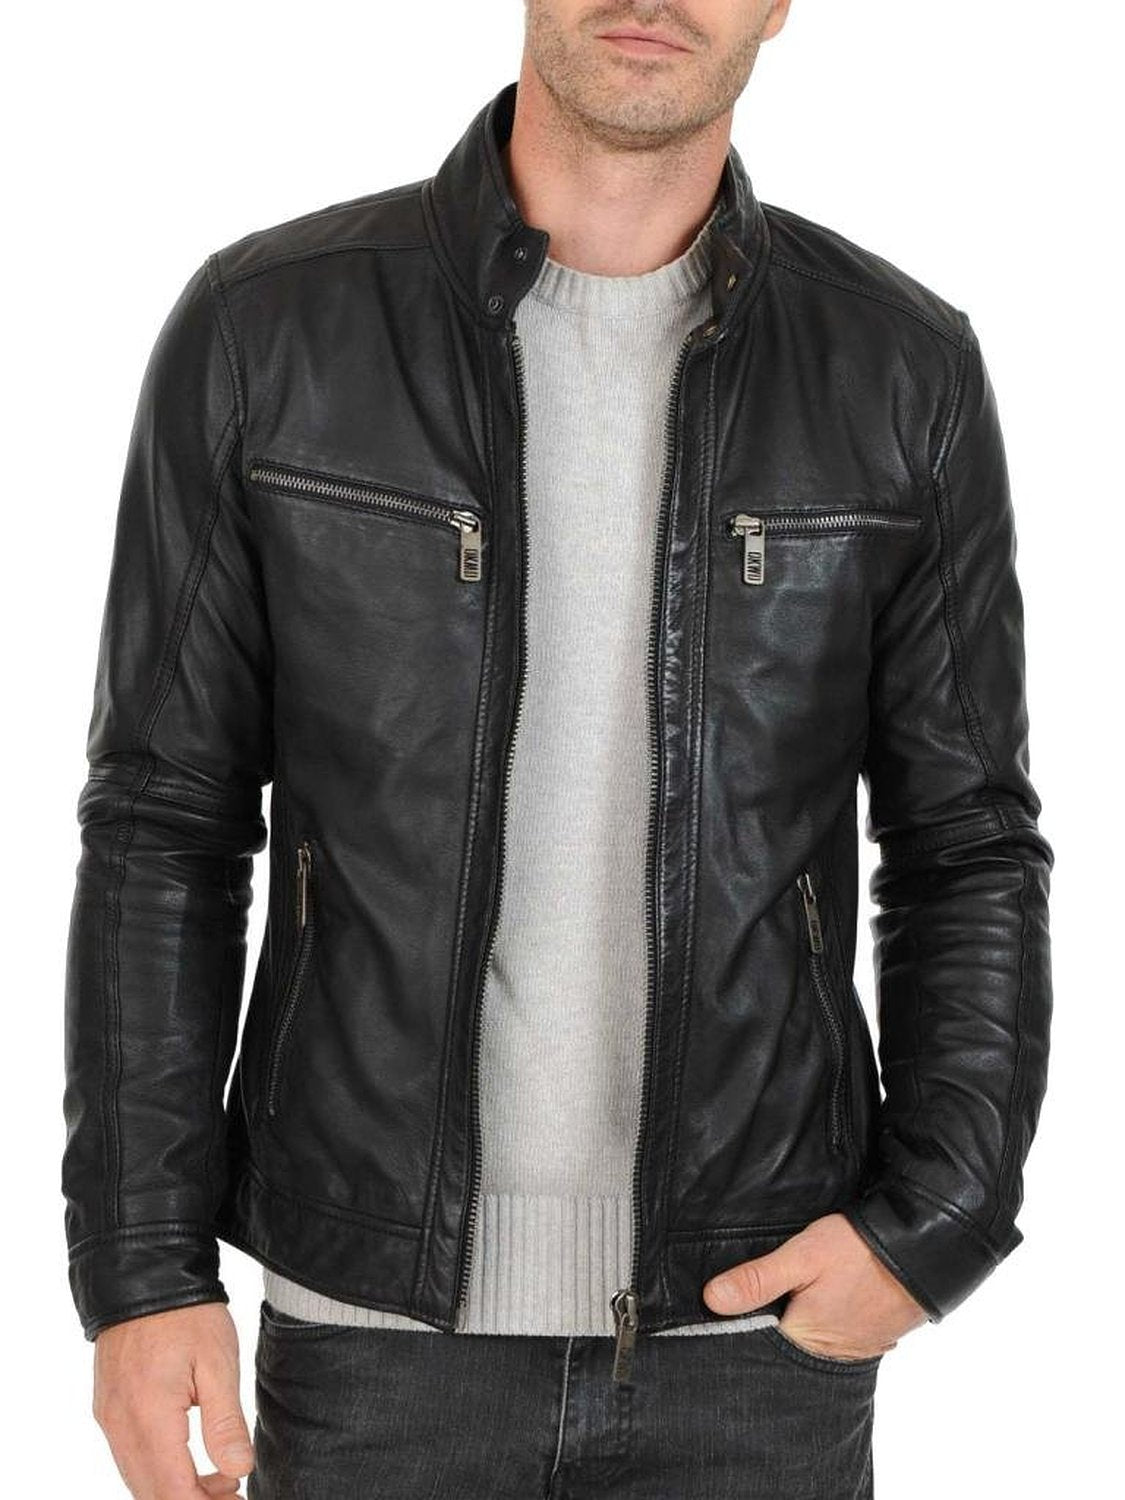 Leather Jackets Hub Mens Genuine Cowhide Leather Jacket (Black, Racer Jacket) - 1501500